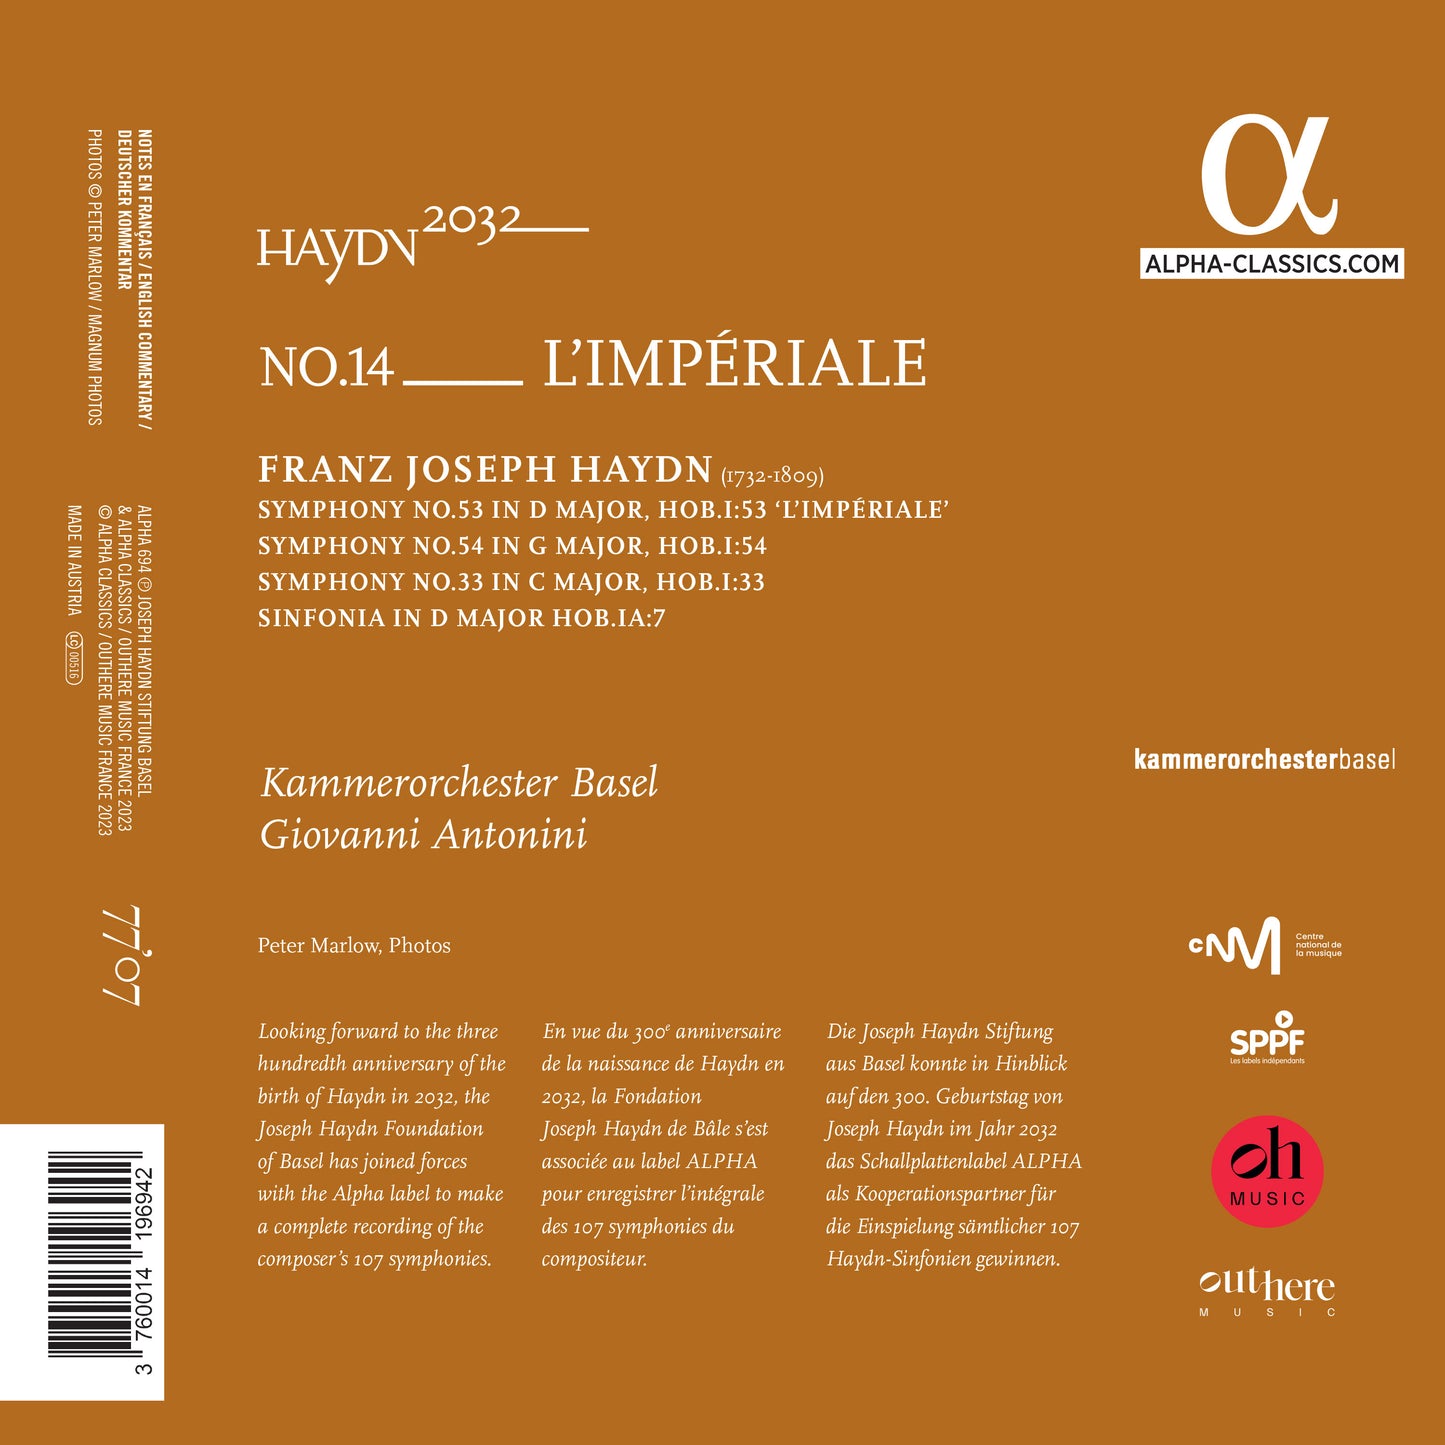 Haydn 2032, Vol. 14 - L/Imperiale